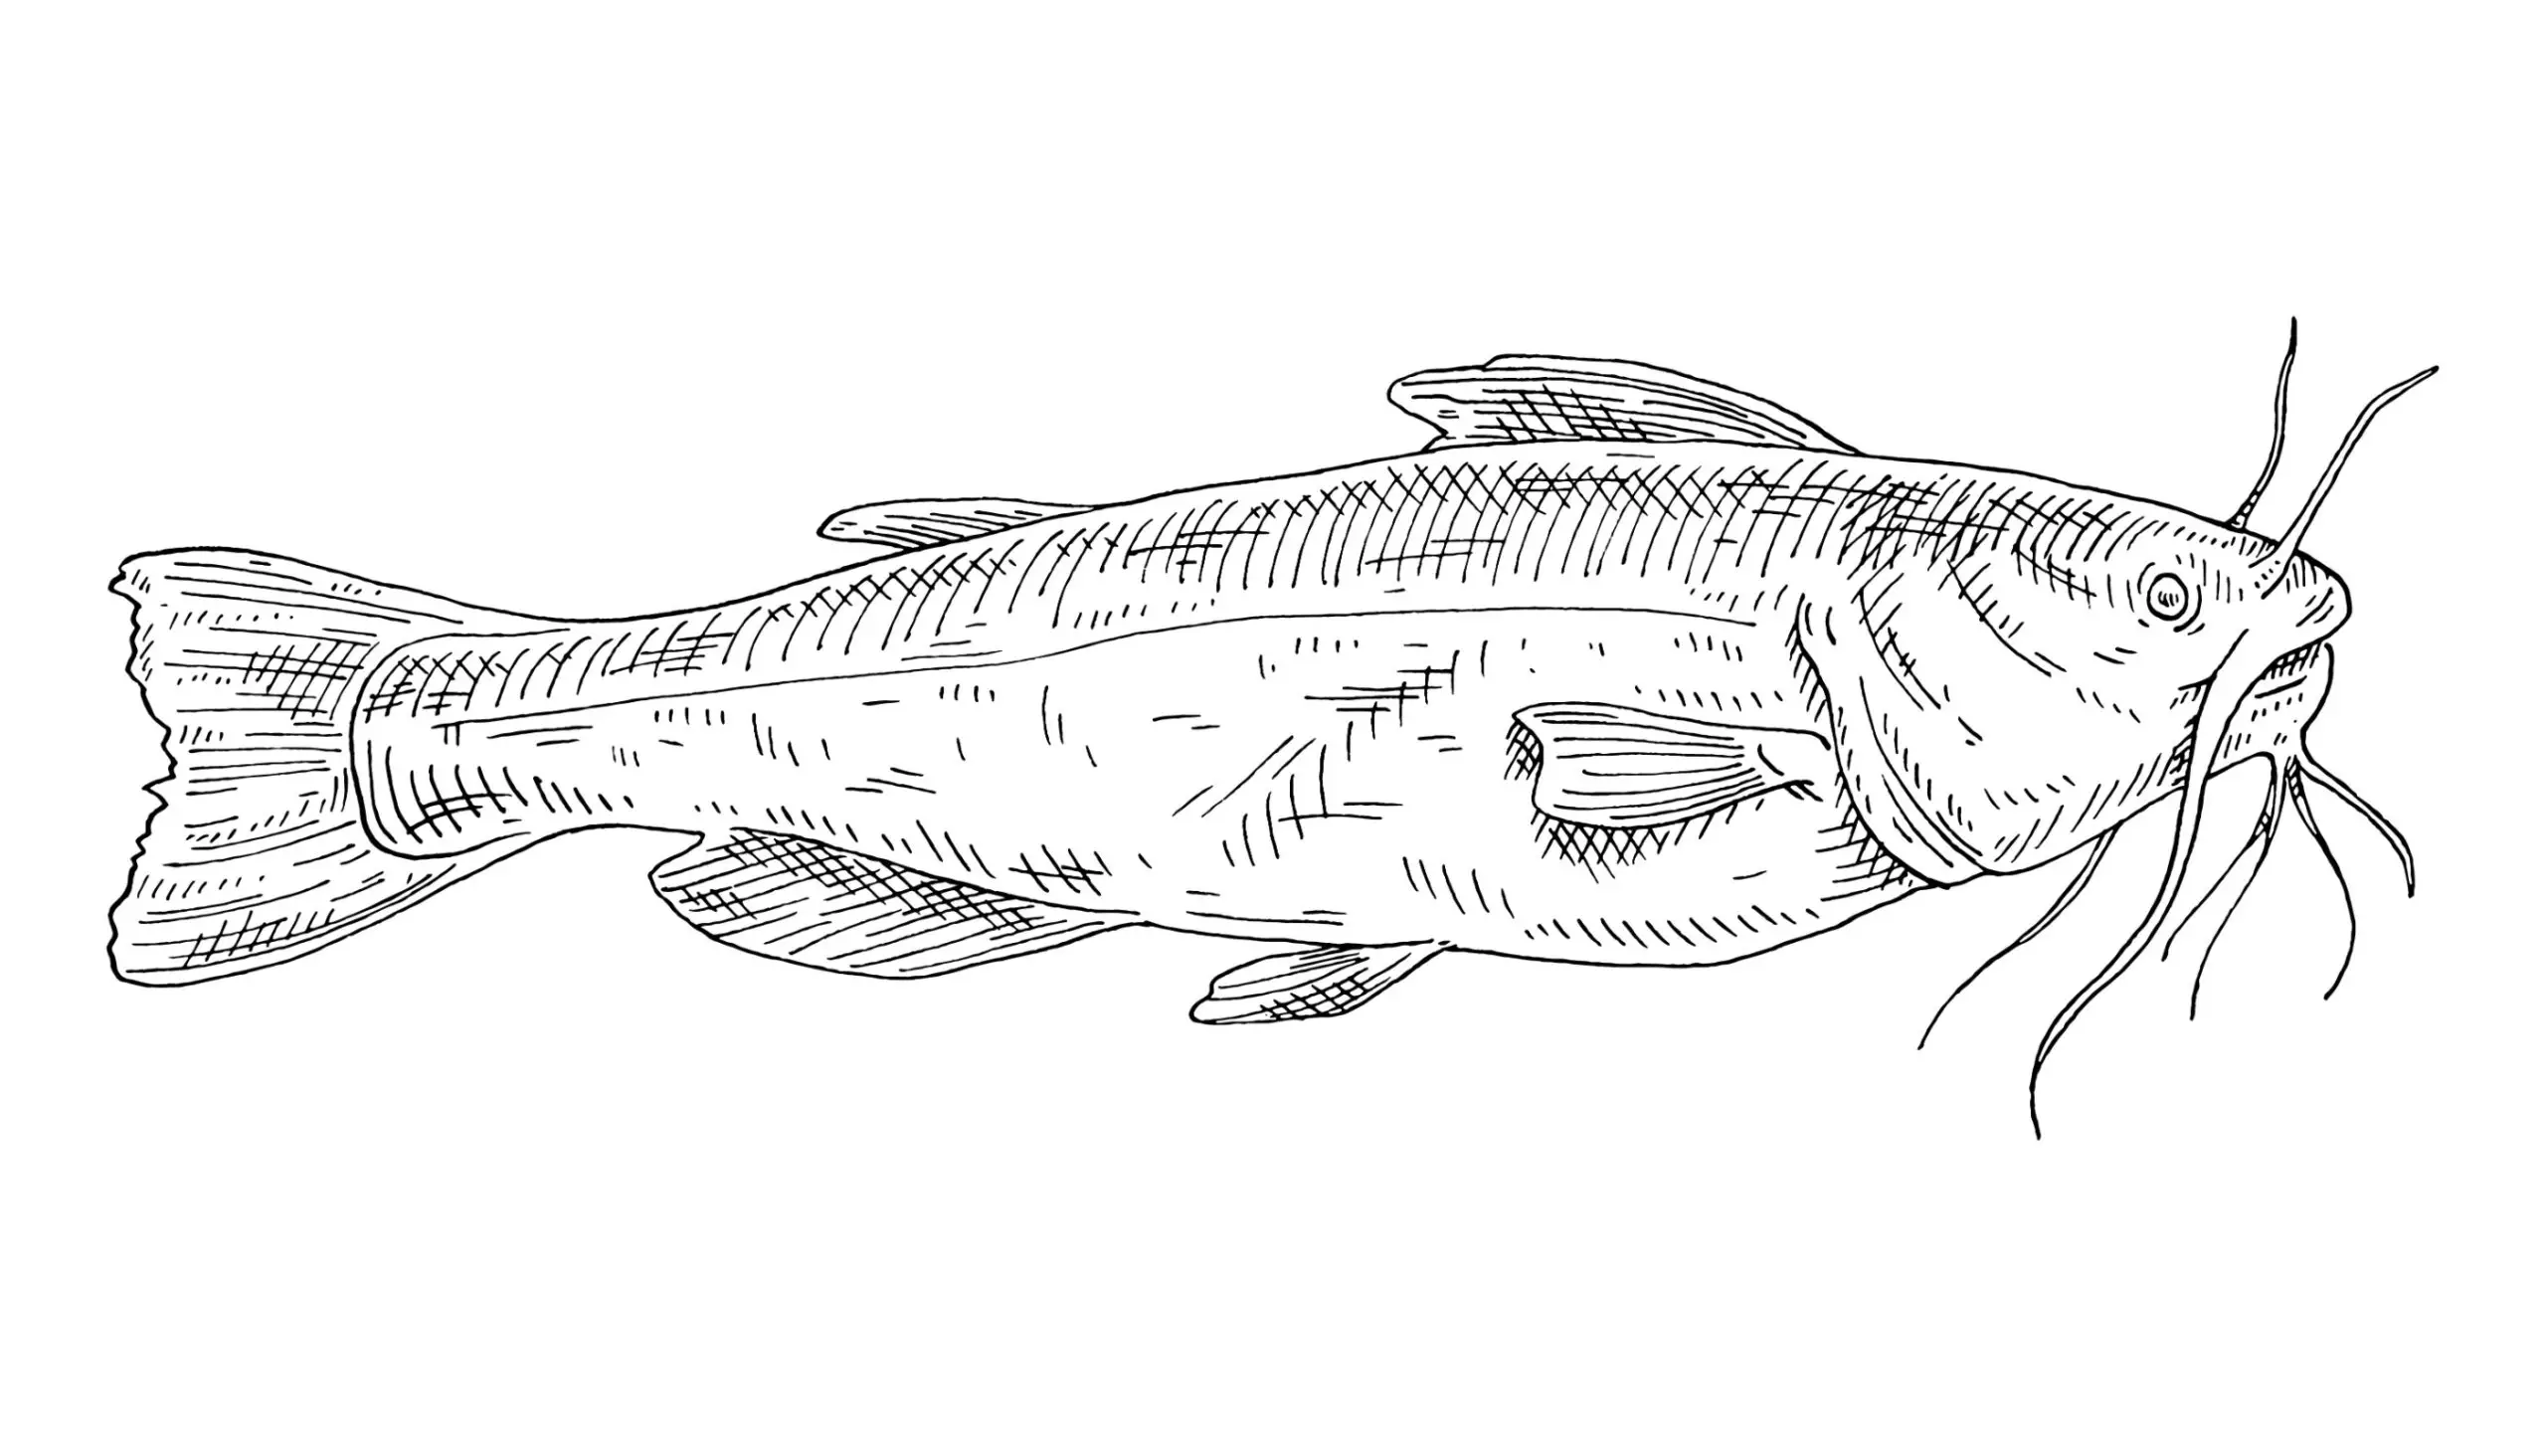 Catfish illustration